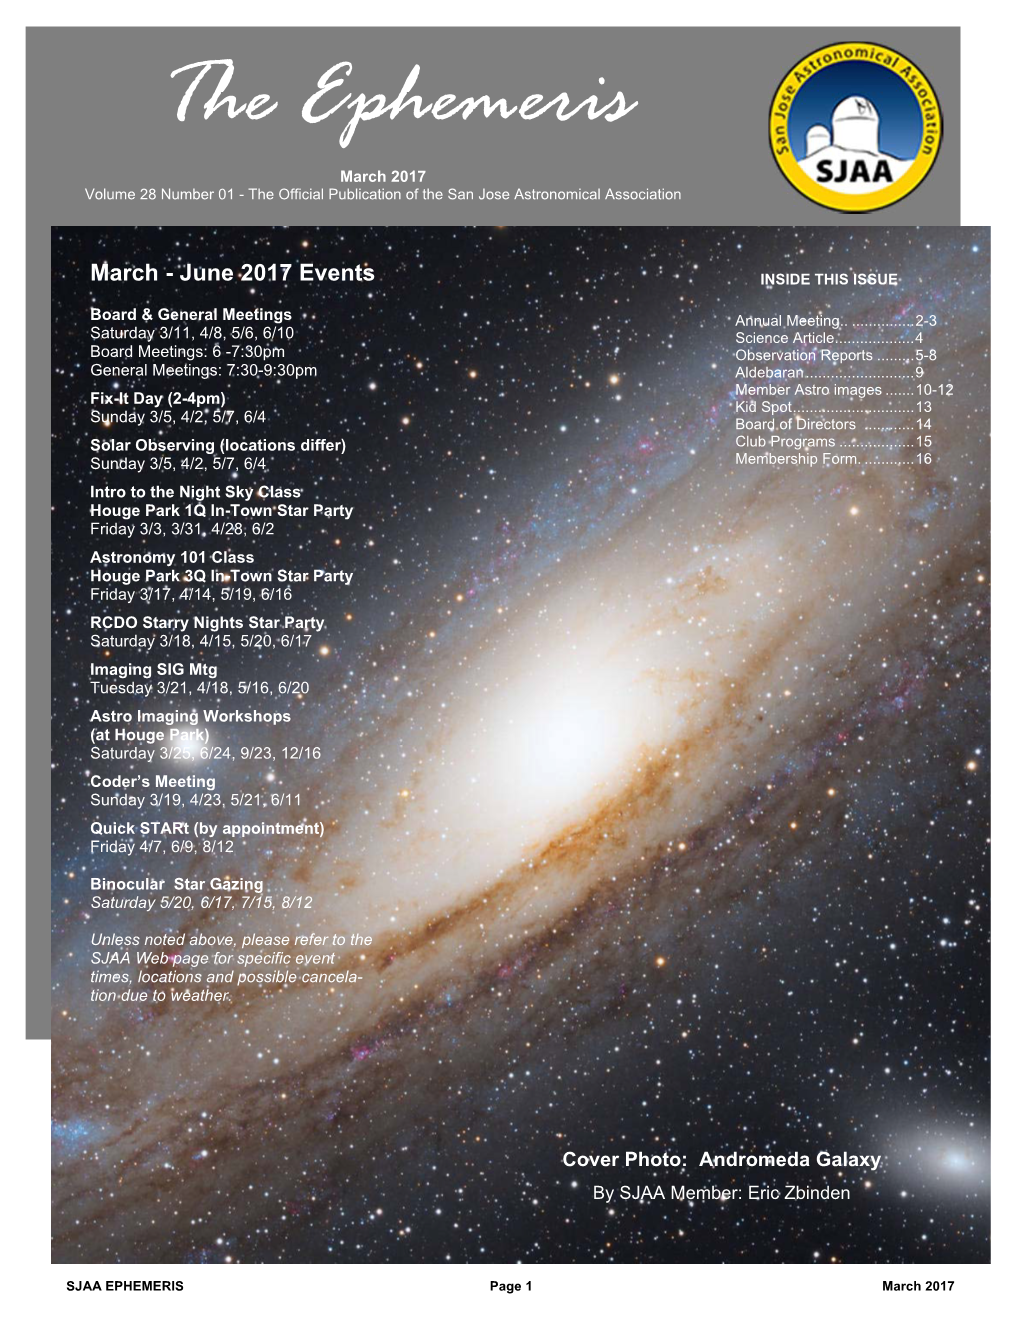 The Ephemeris March 2017 Volume 28 Number 01 - the Official Publication of the San Jose Astronomical Association